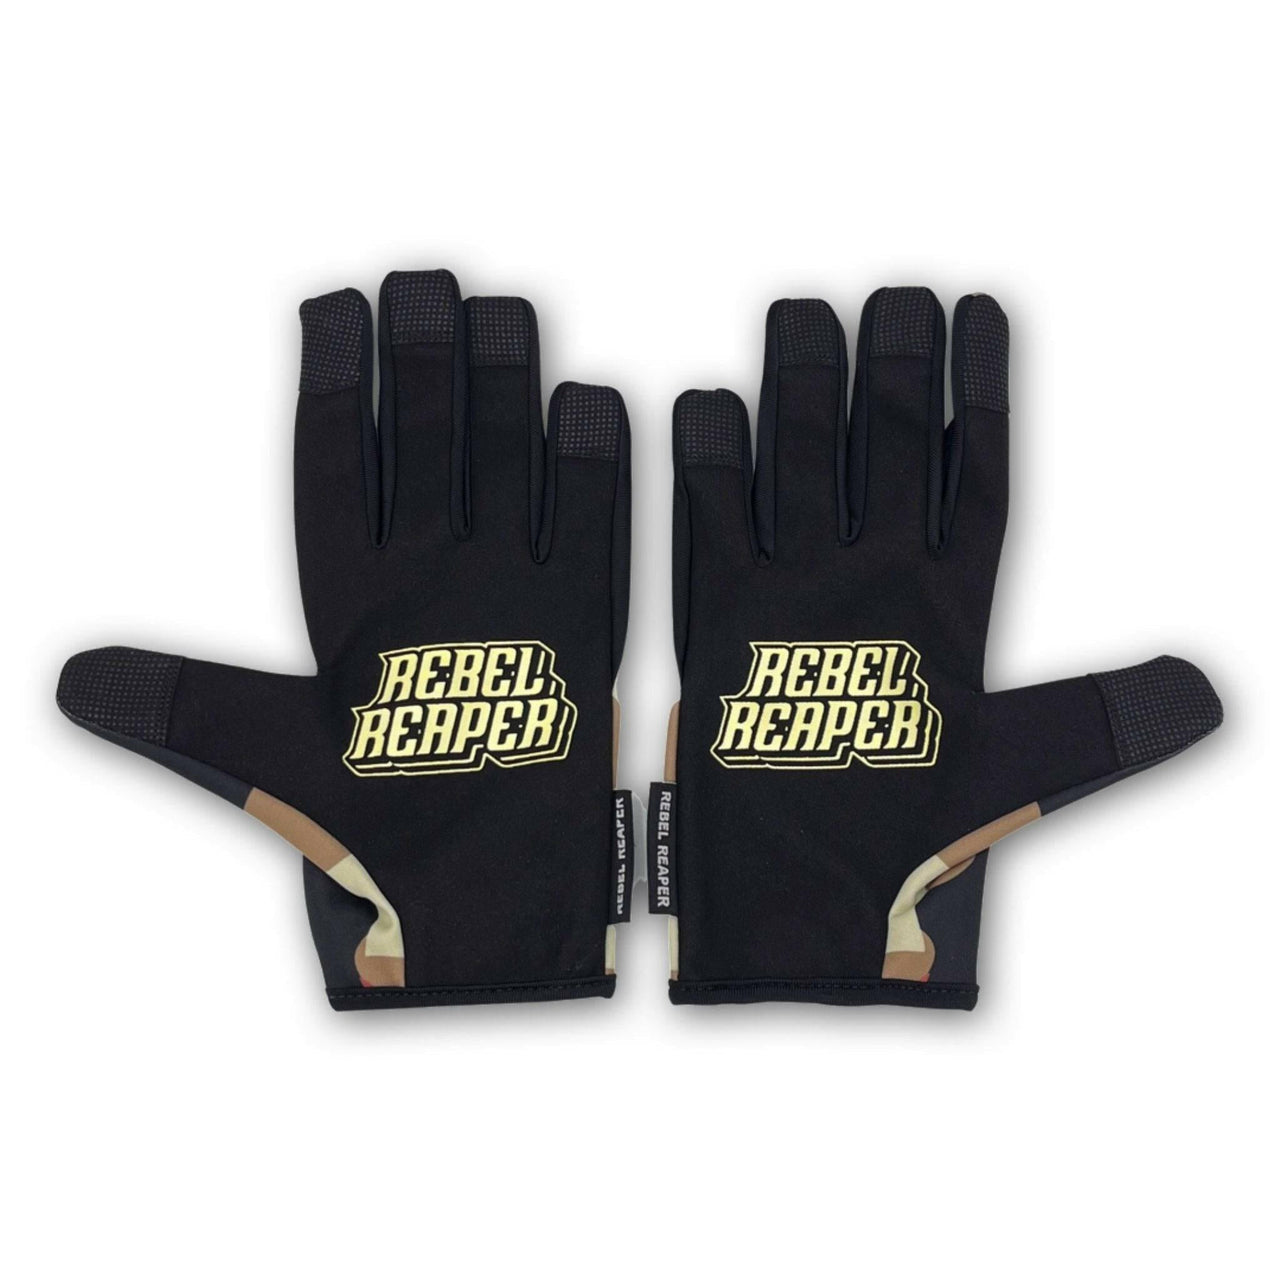 Green Camo Lightweight Gloves - Rebel Reaper Clothing Company Lightweight Moto Gloves